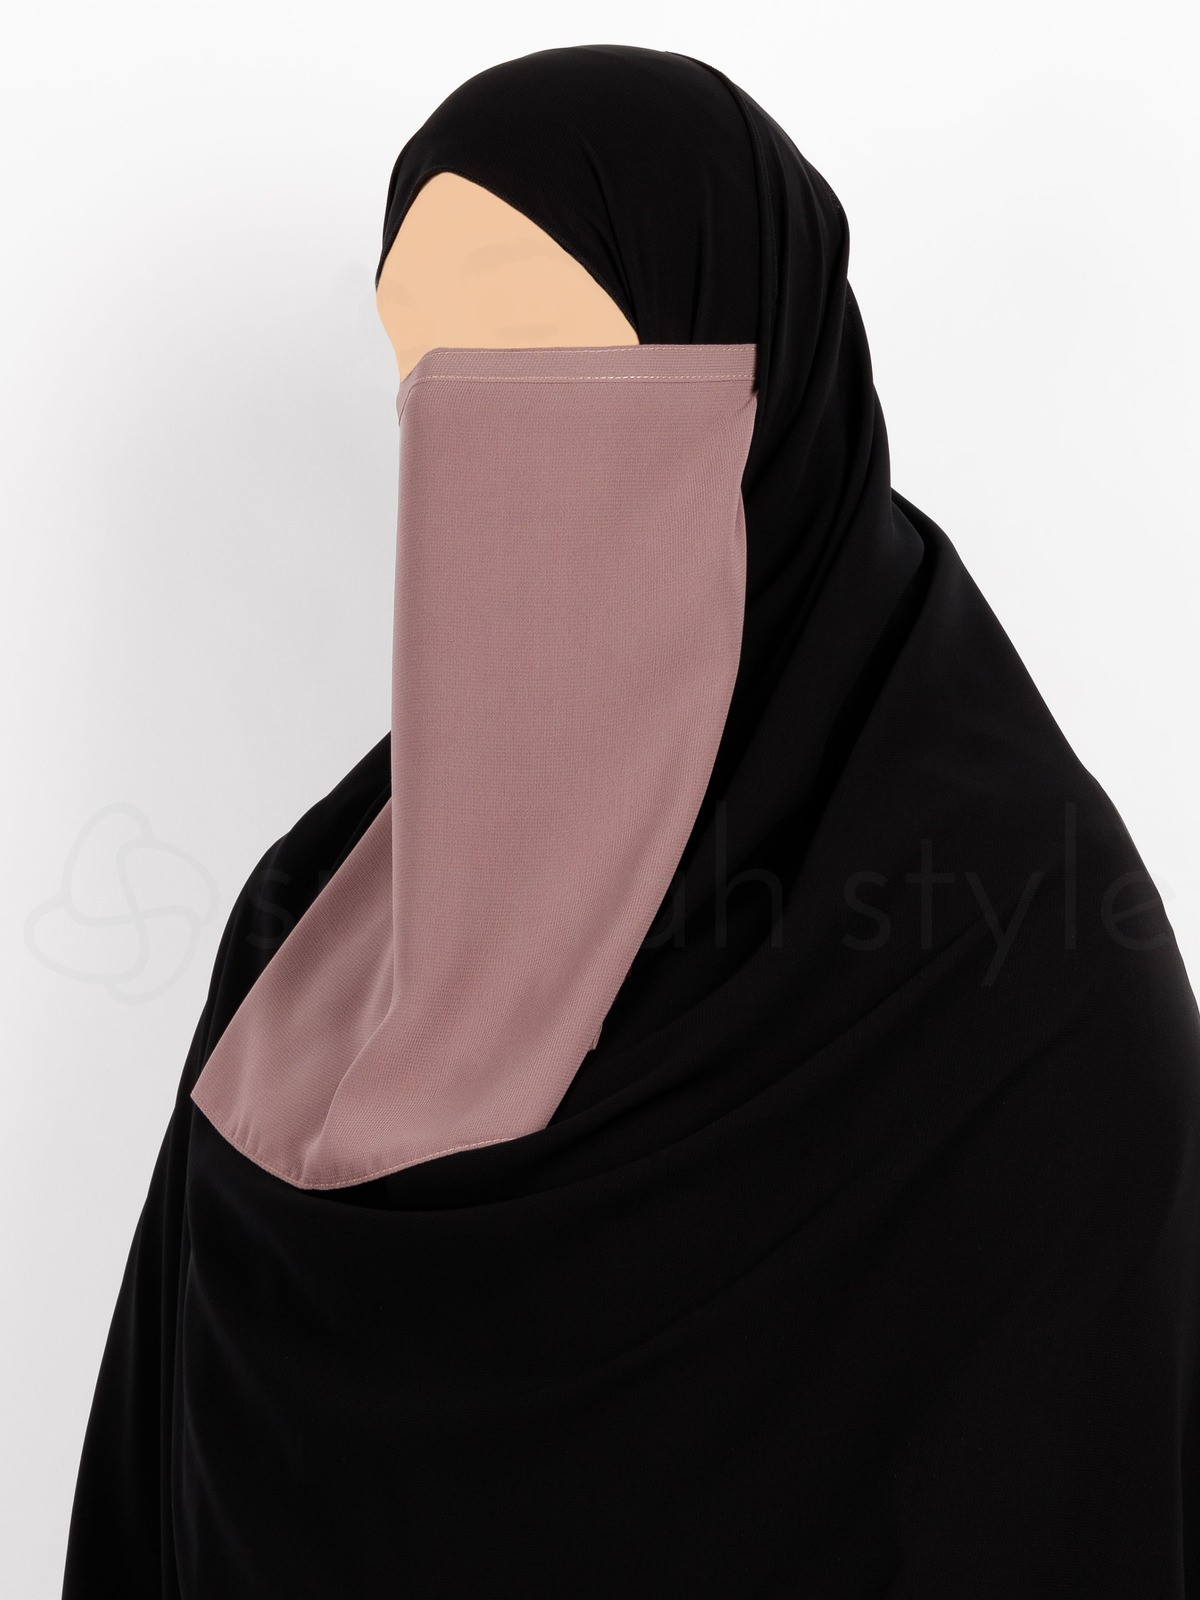 Sunnah Style - Tying Half Niqab (Twilight Mauve)